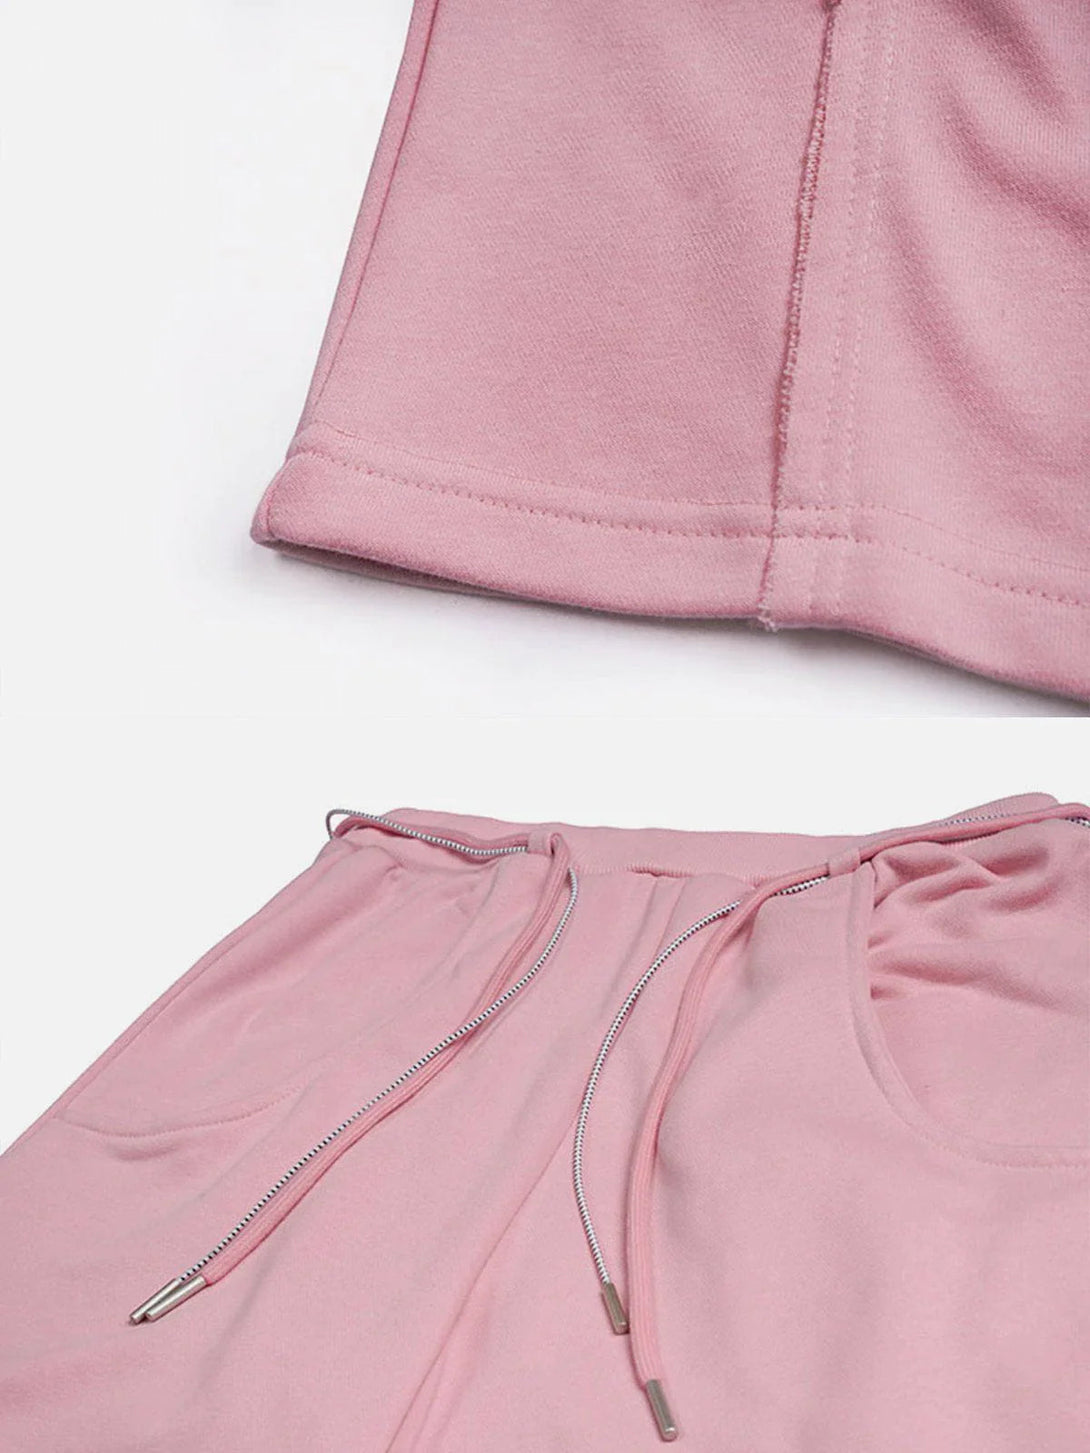 Majesda® - Solid Drawstring Pants outfit ideas streetwear fashion